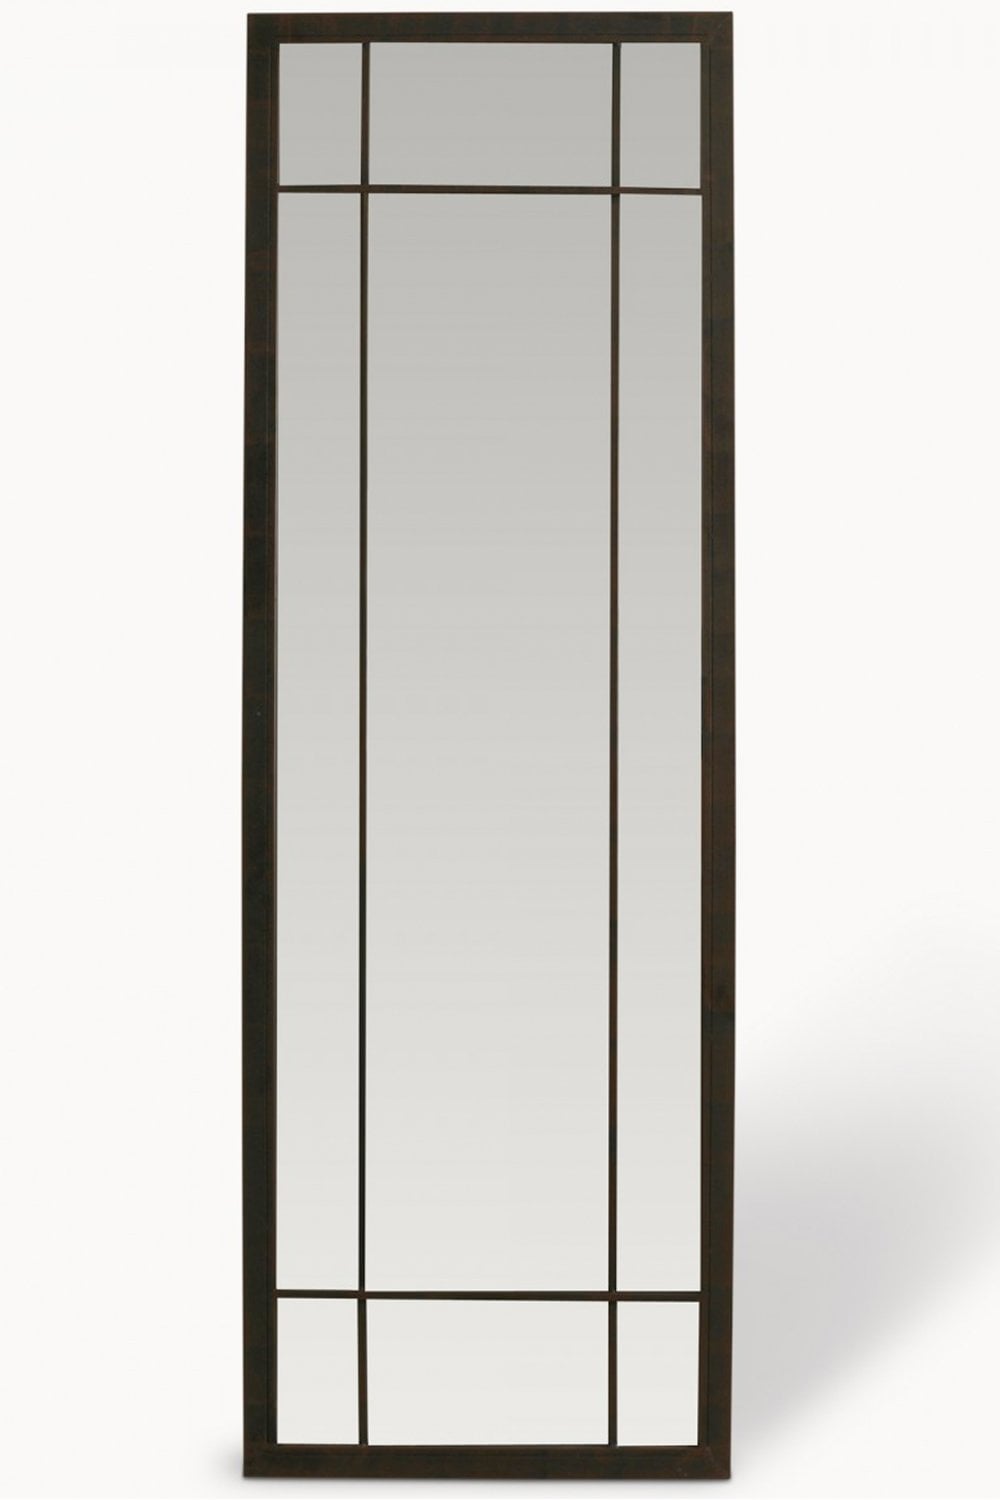 The Home Collection Wilton Iron Dressing Mirror